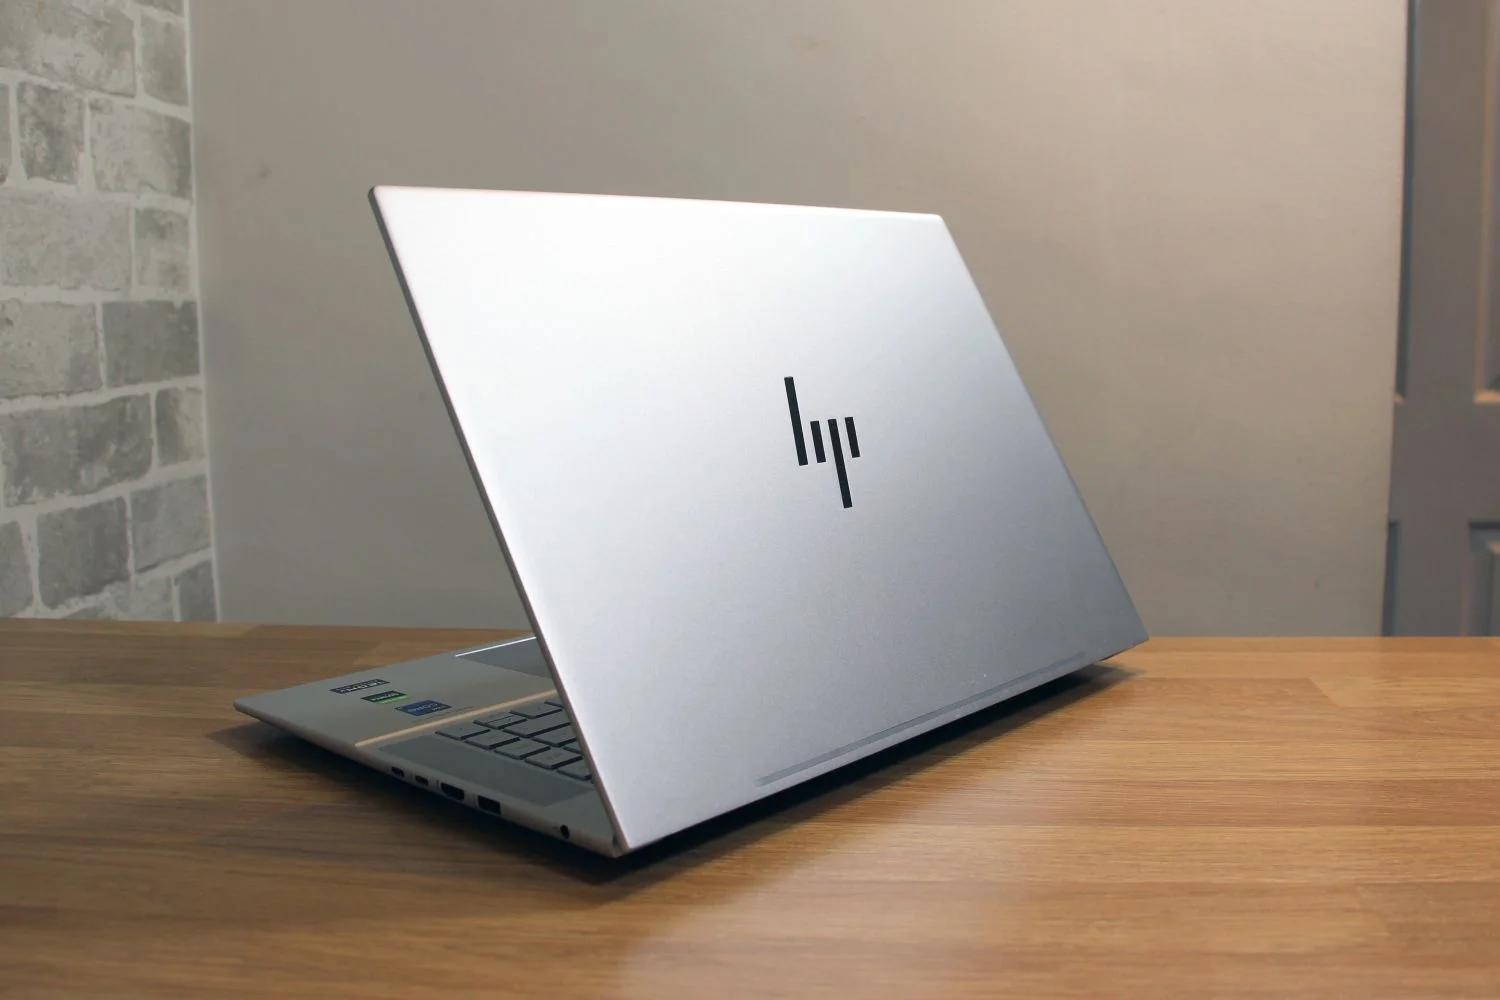 hewlett-packard laptop companies - What companies use HP laptops